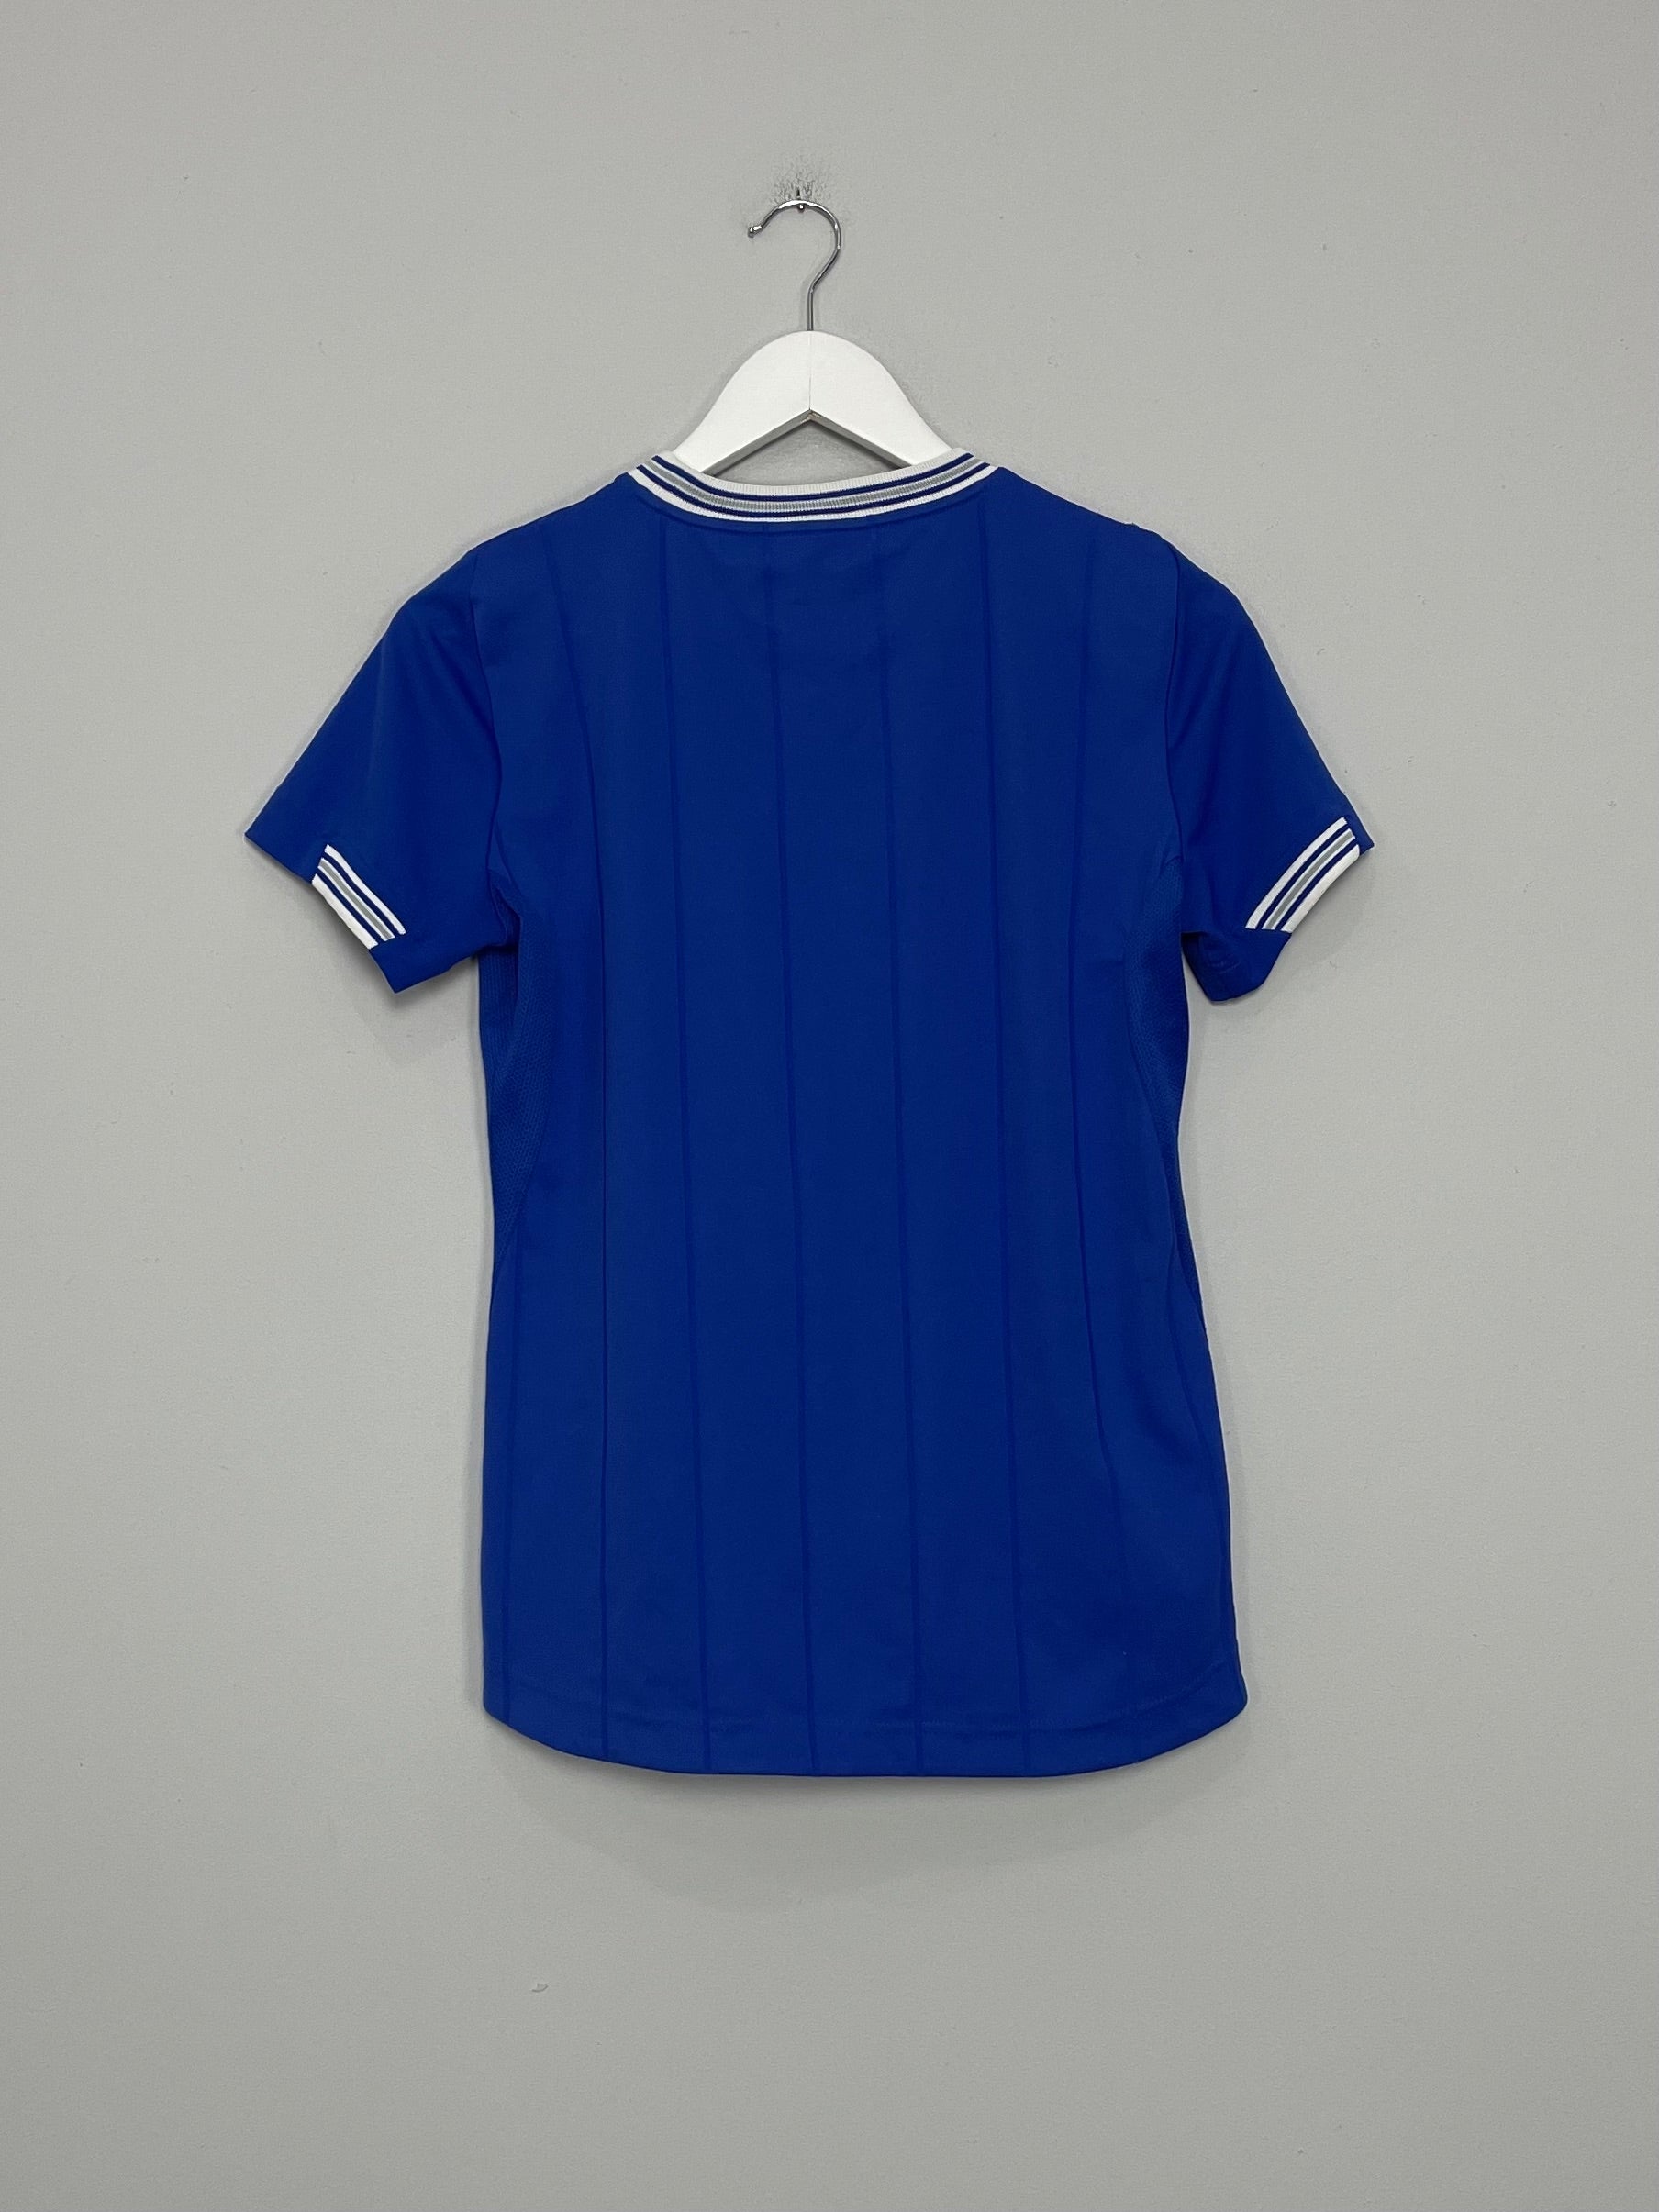 Classic Everton Football Shirt